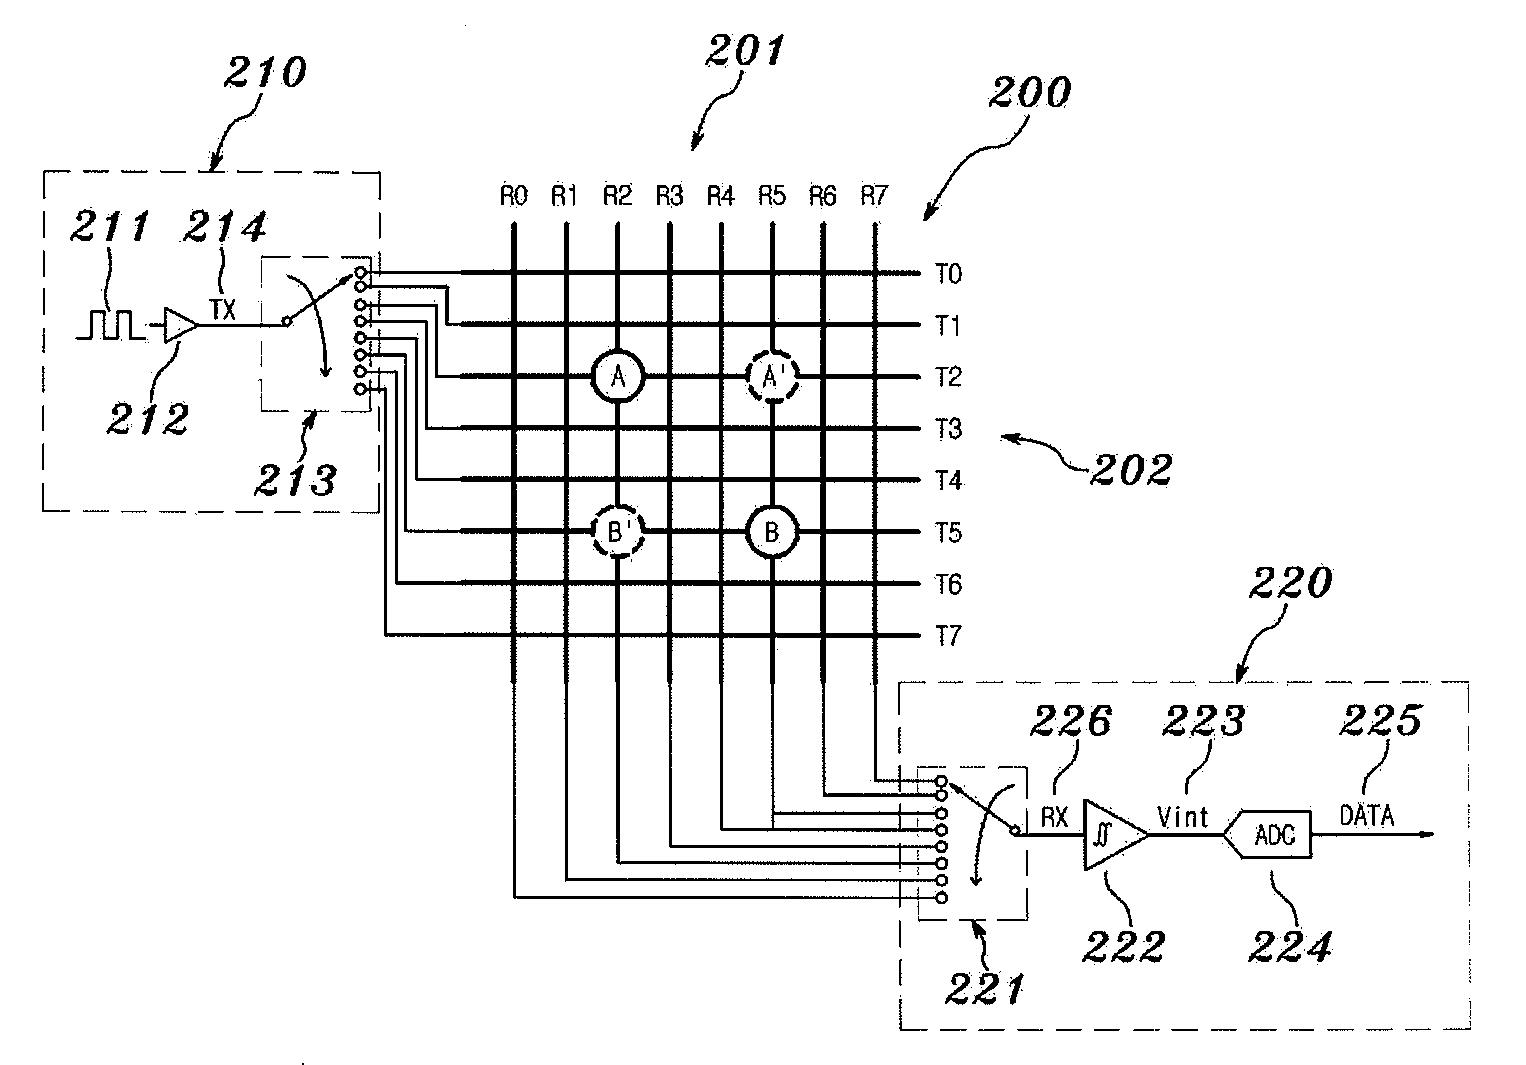 Multi-touch panel capacitance sensing circuit